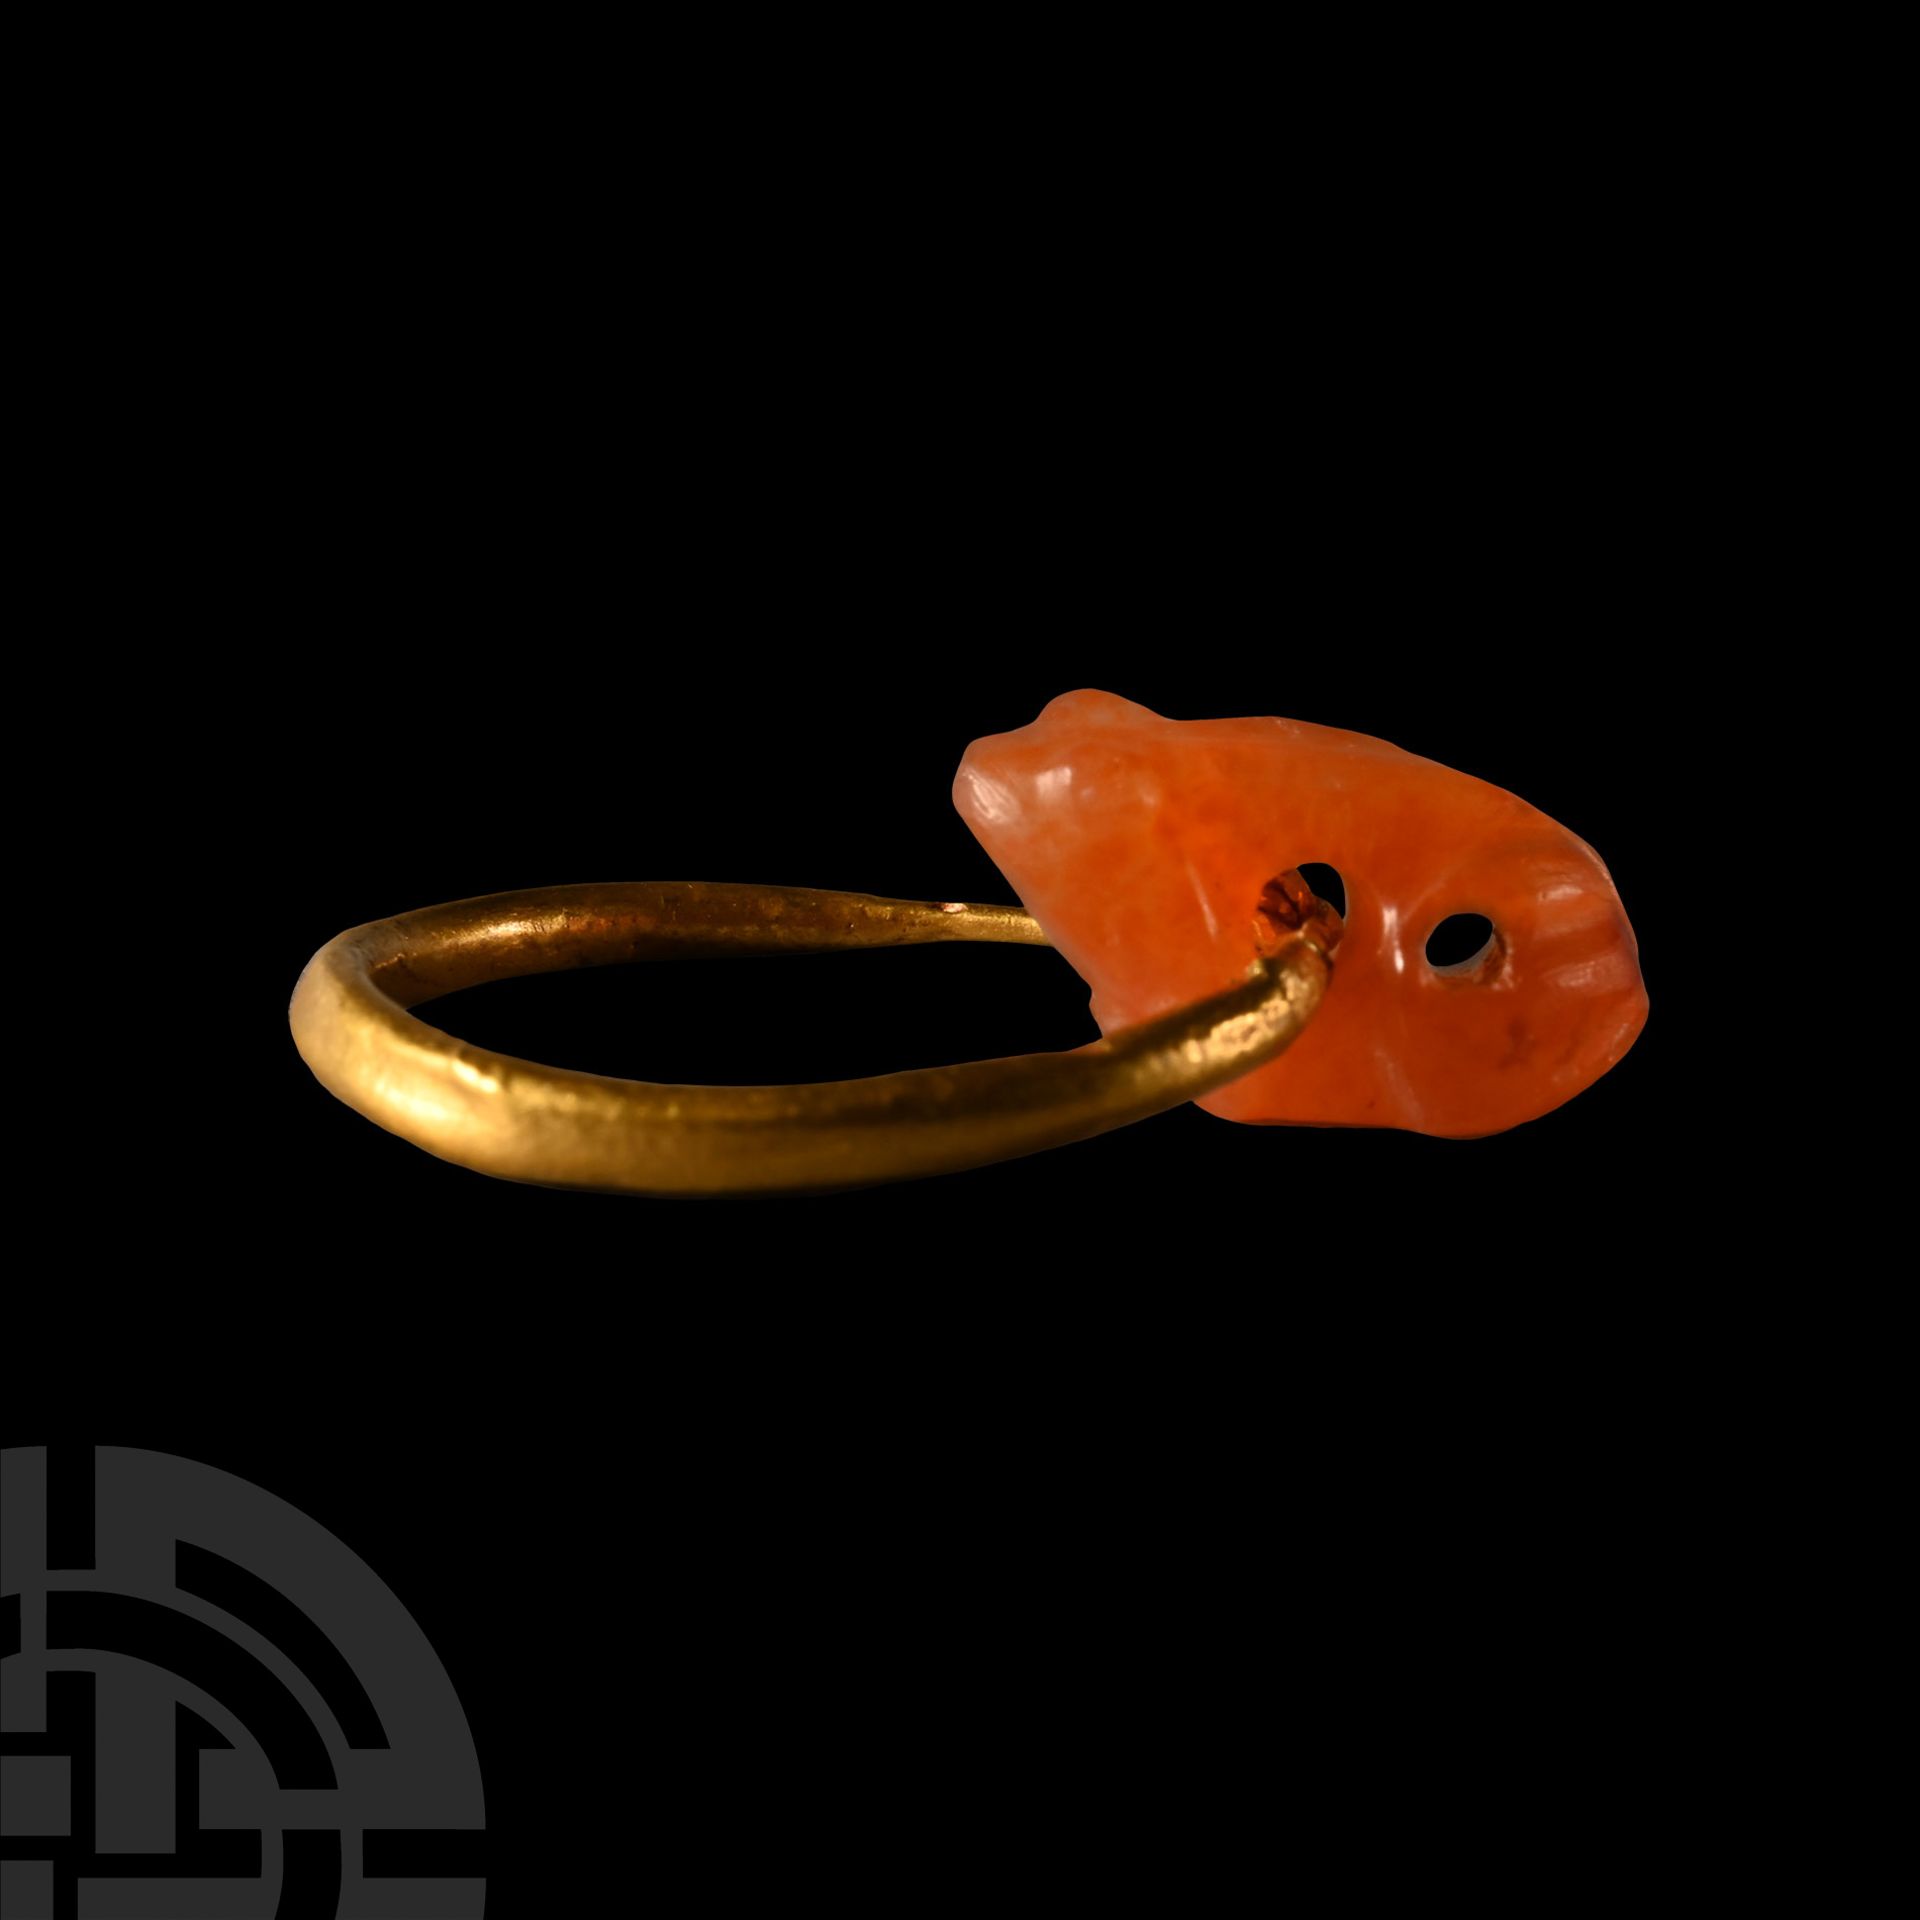 Old Babylonian Carnelian Frog Amulet on Gold Earring - Image 2 of 2